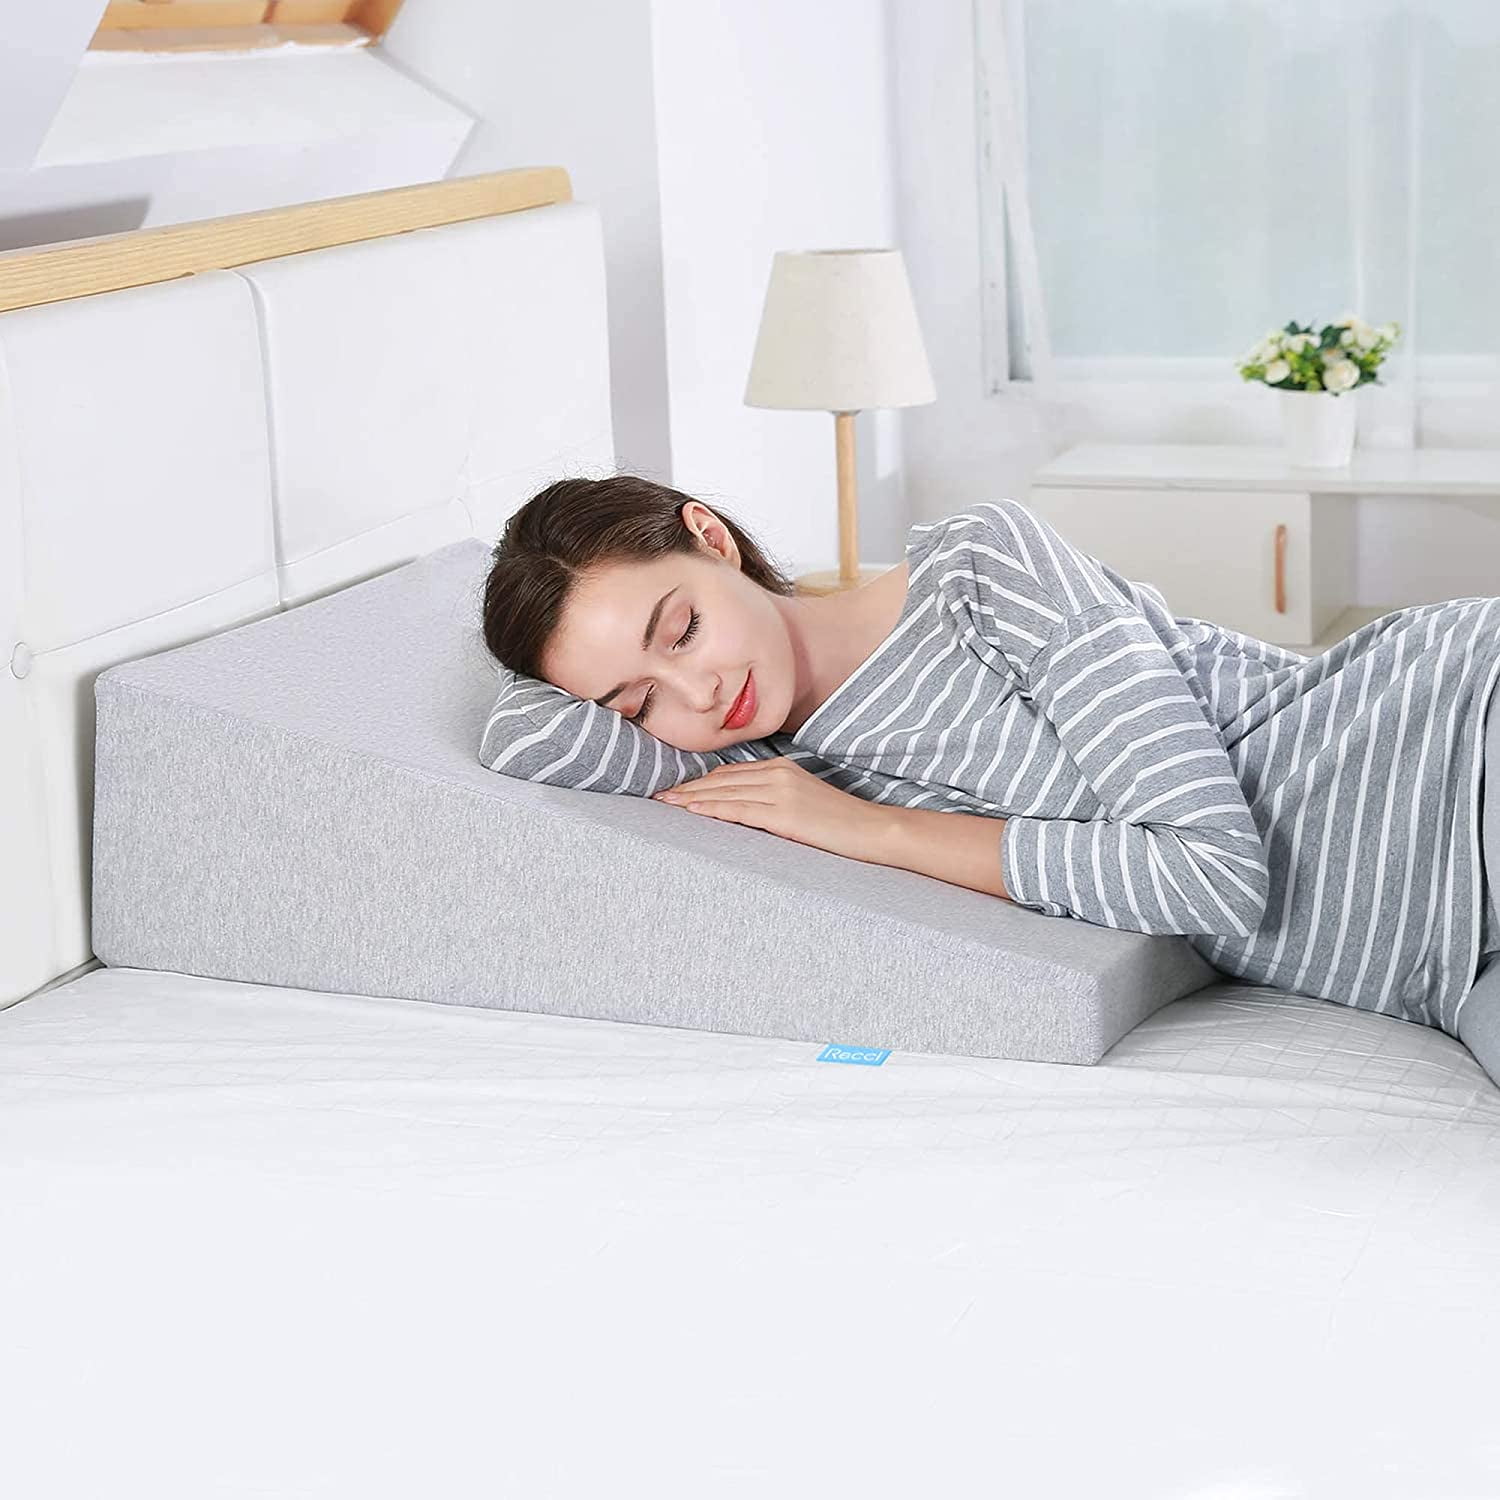 Hot Style  Elevating Wedge Foam Seat Cushion Pillow Support Orthopedic Wellness 